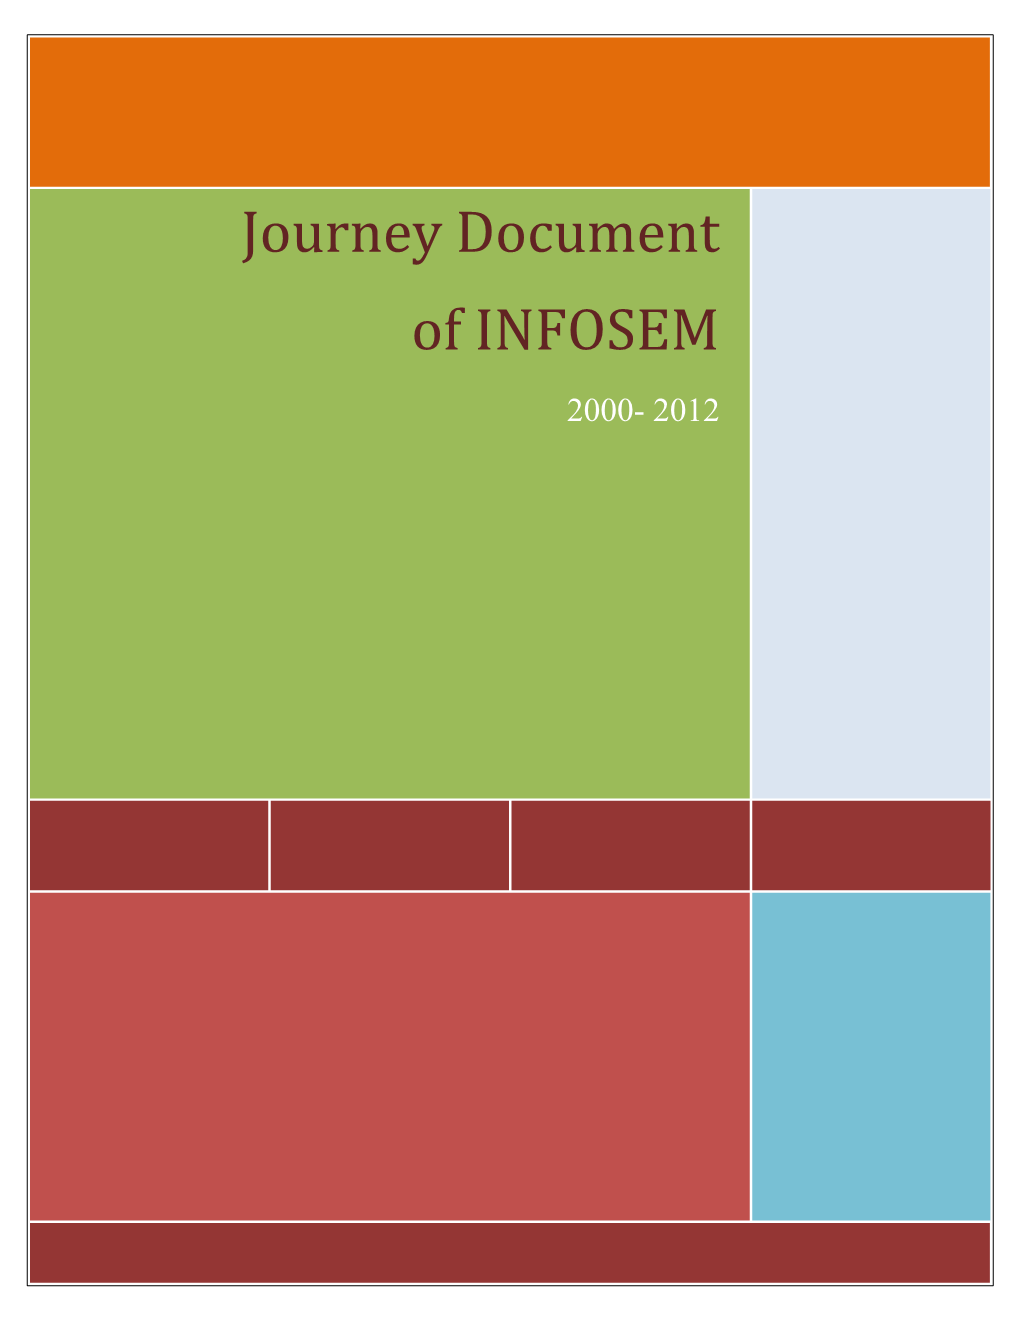 Journey Document of INFOSEM 2000- 2012